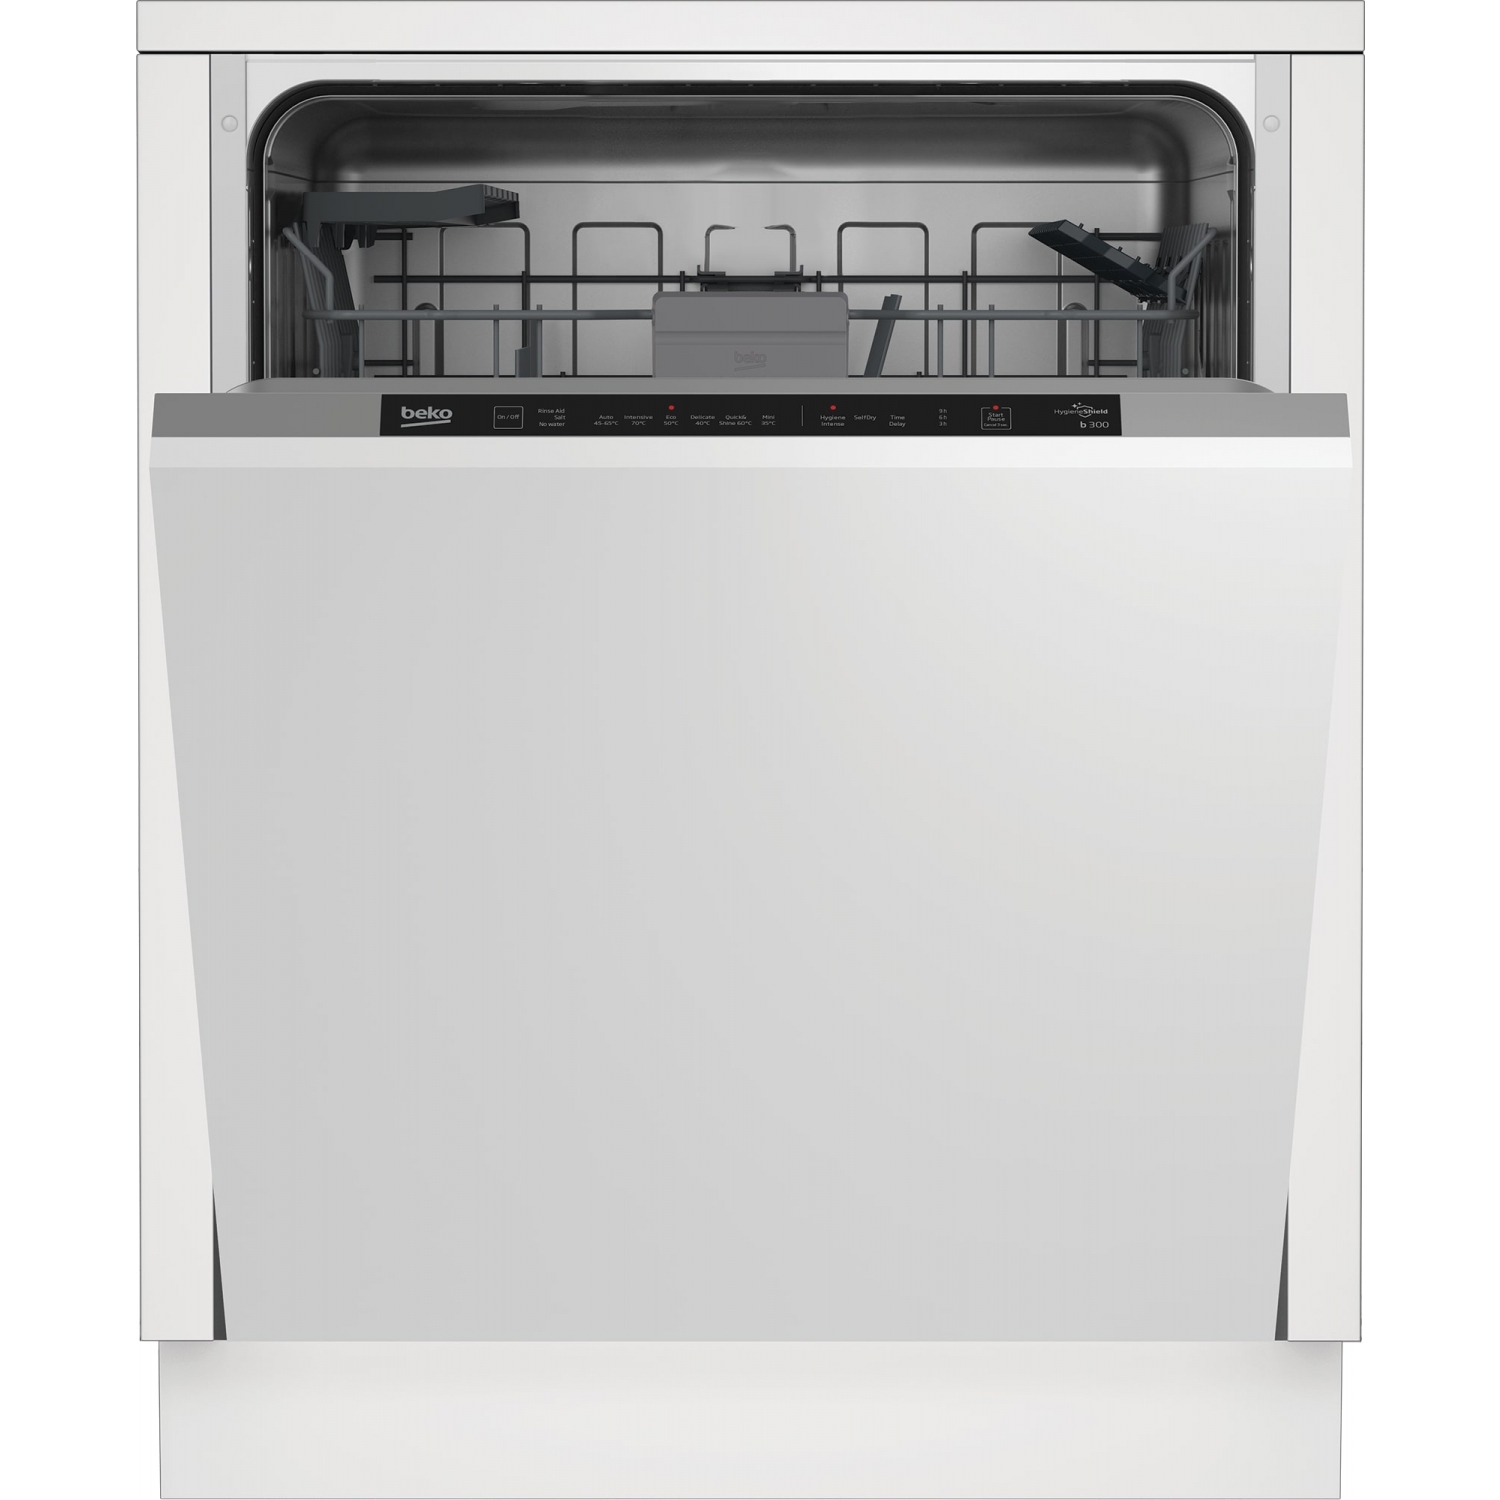 Beko BDIN16431 Integrated Full Size Dishwasher - Black Control panel - 14 Place Settings - 0